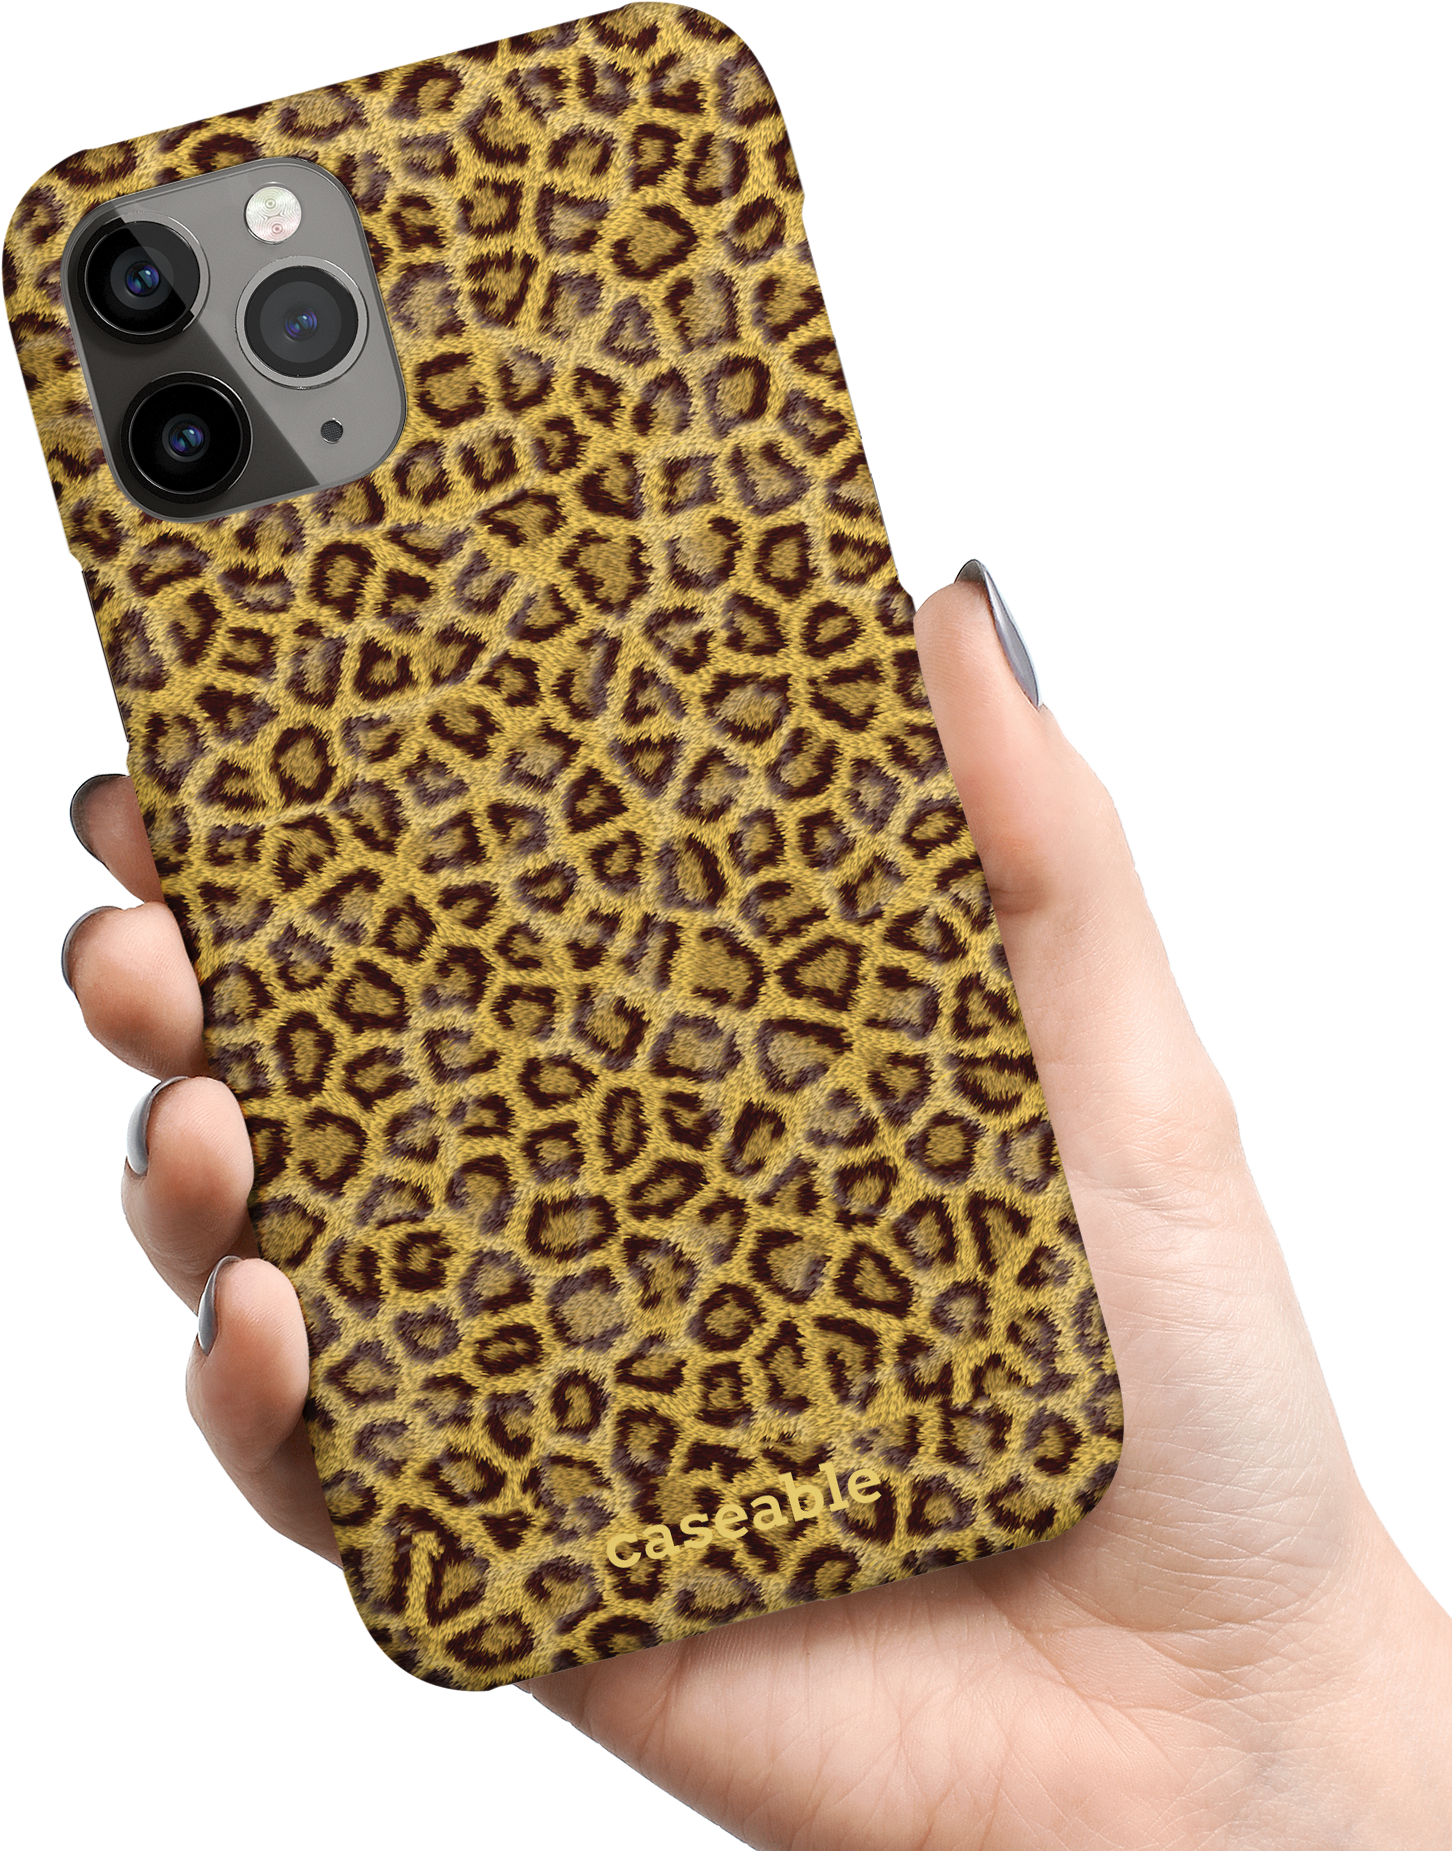 Leopard Skin Hardcase Handyhülle Apple iPhone 11 Pro in der Hand gehalten